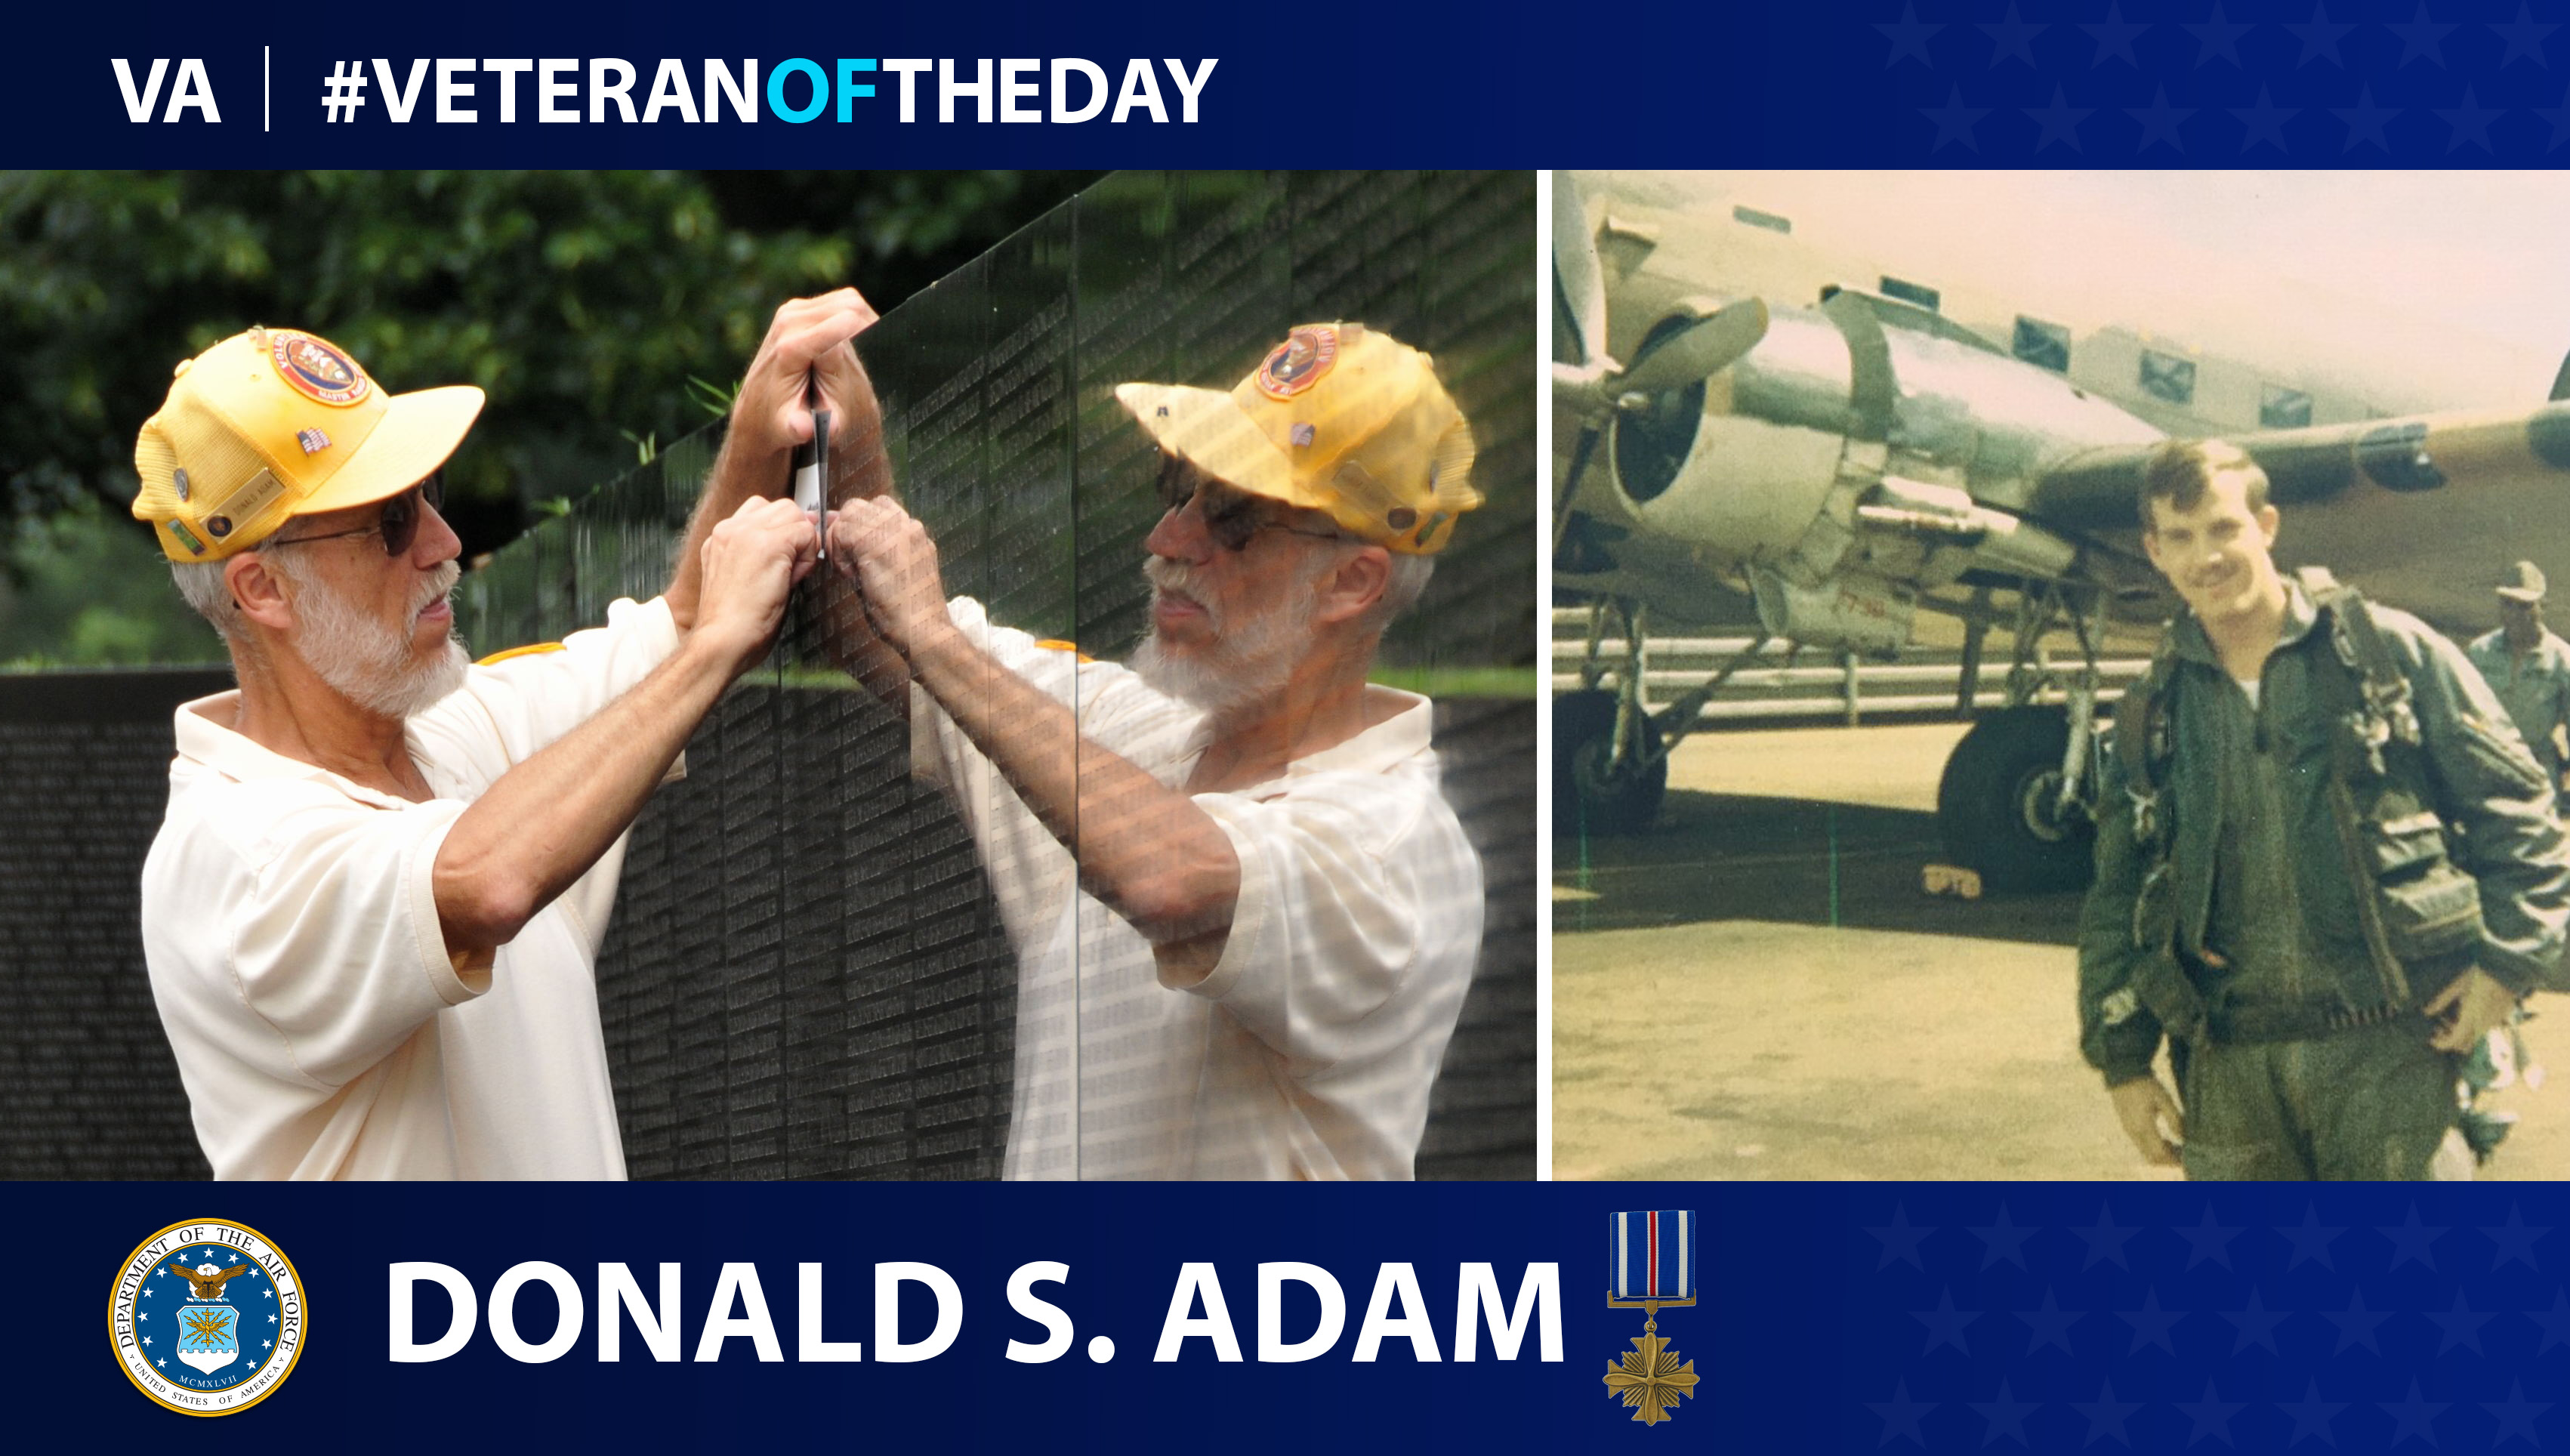 Air Force Veteran Donald S. Adam is today's Veteran of the Day.